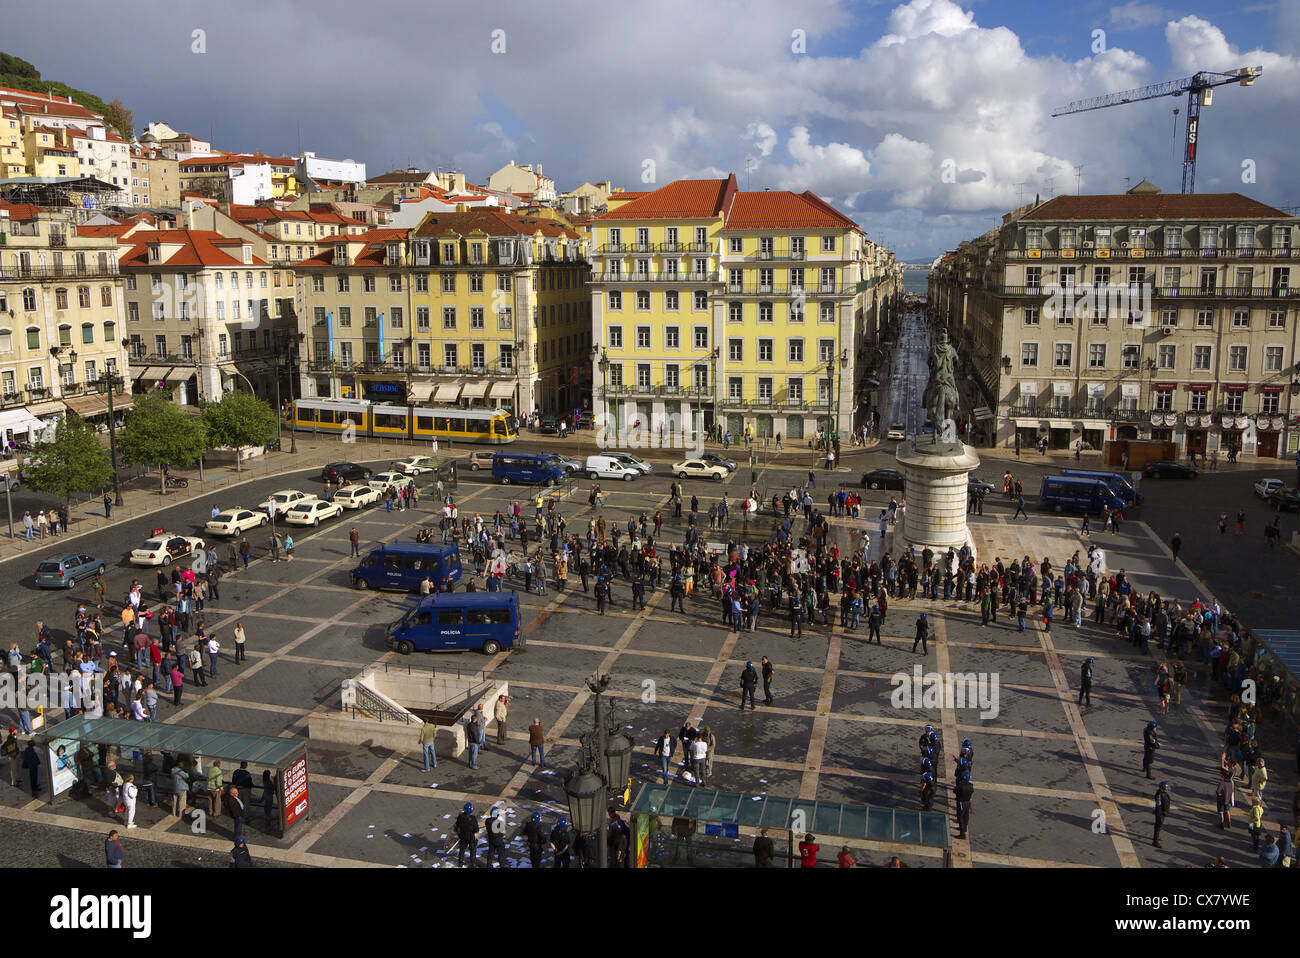 Praca da Figueira in Lissabon, Portugal. Stockfoto